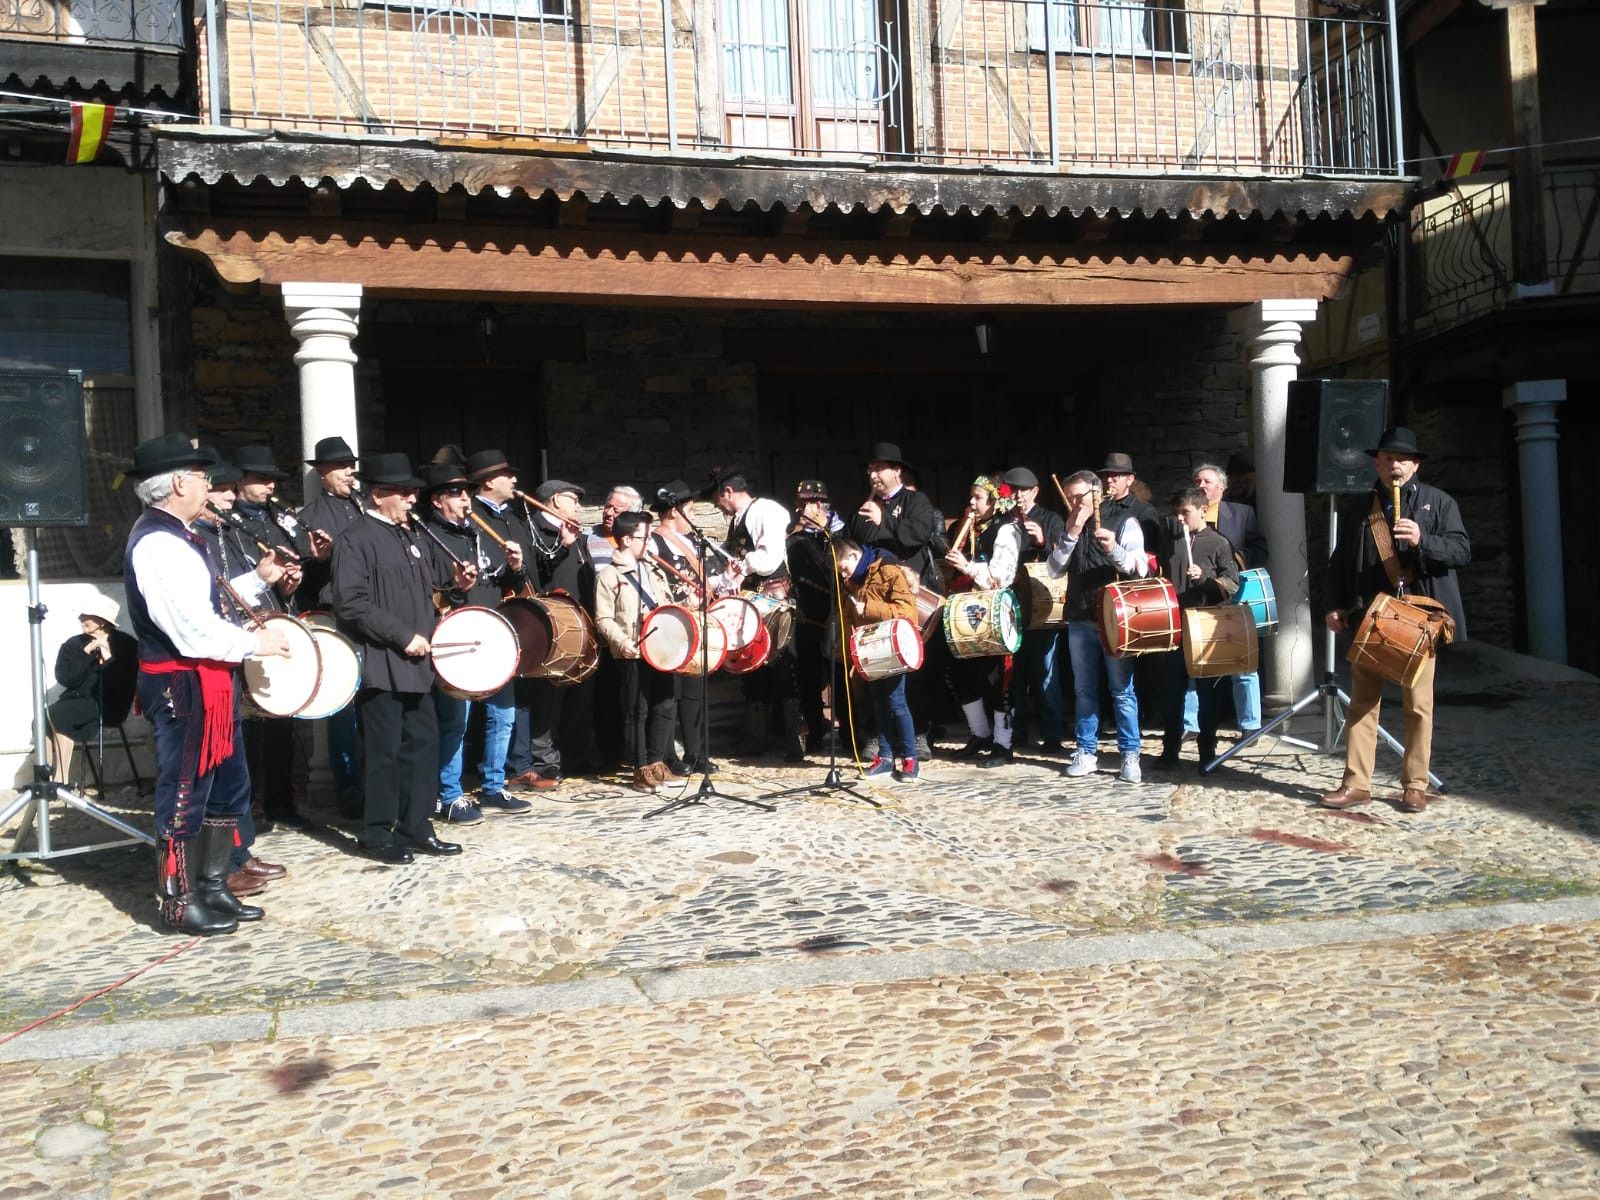  Festival de tamborileros en valero (5) 